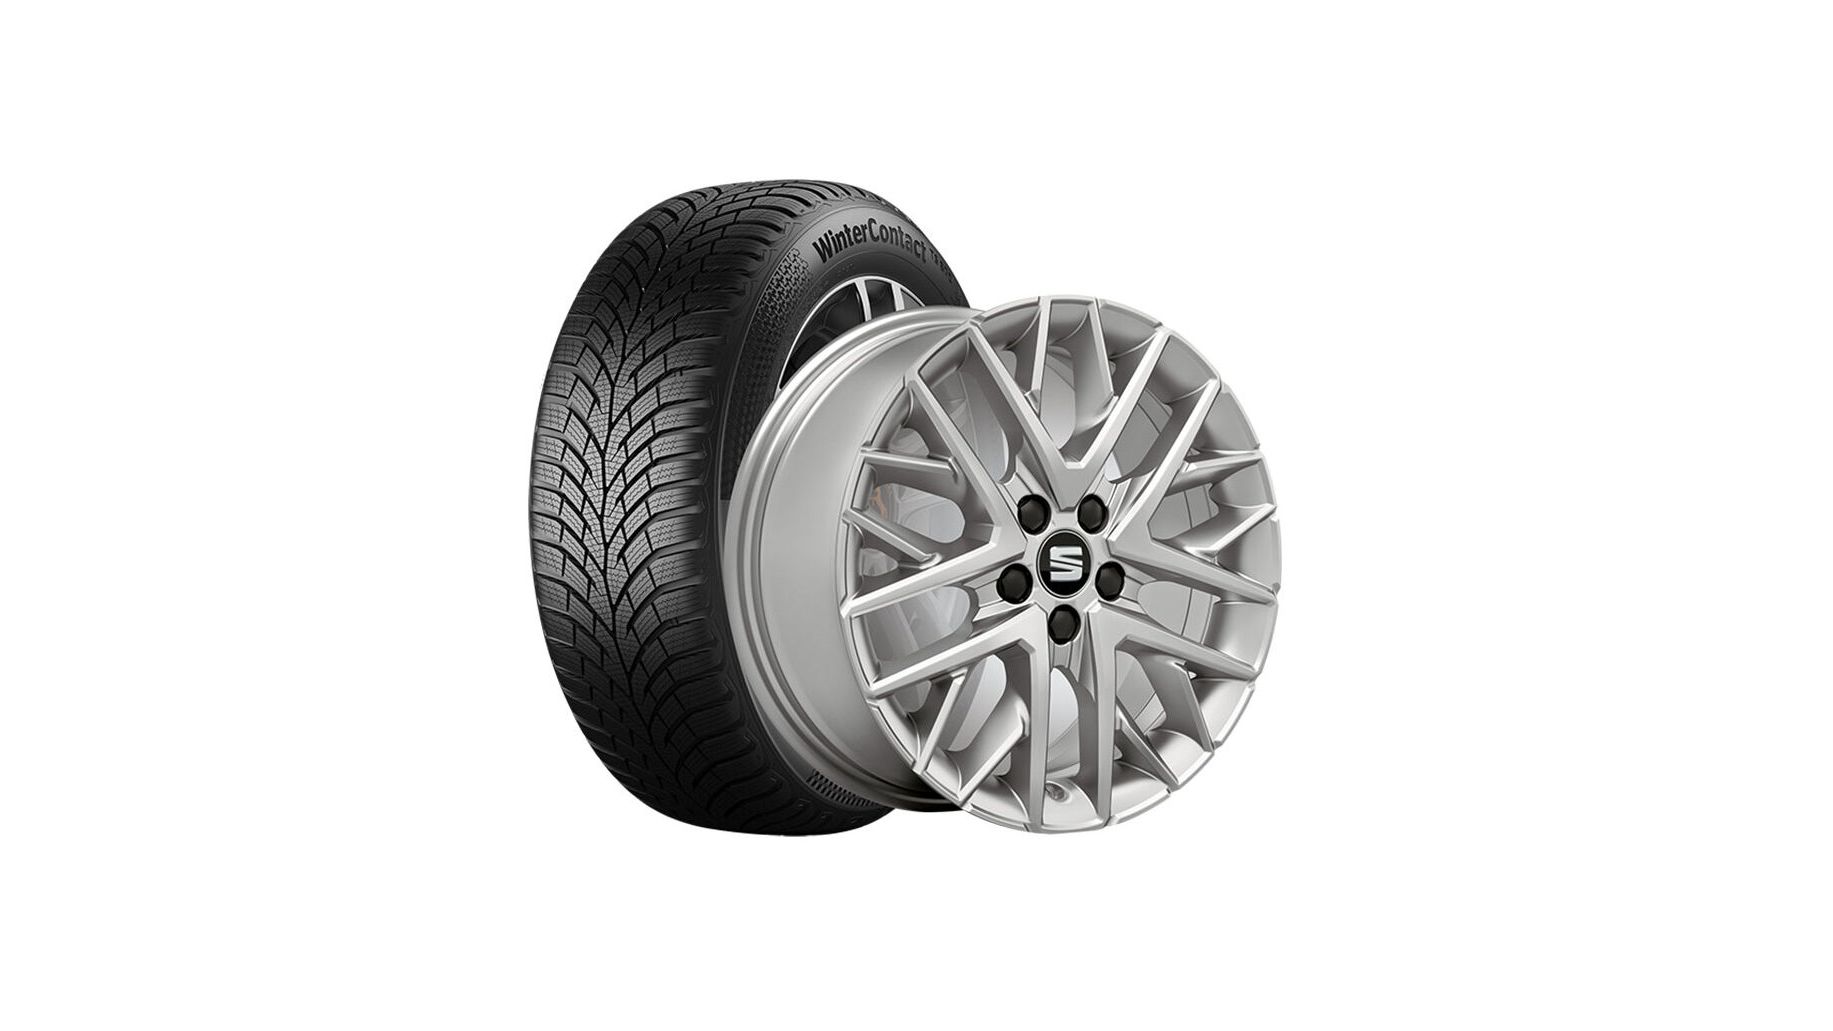 SEAT Ibiza Design Winterkomplettrad Pirelli Reifen